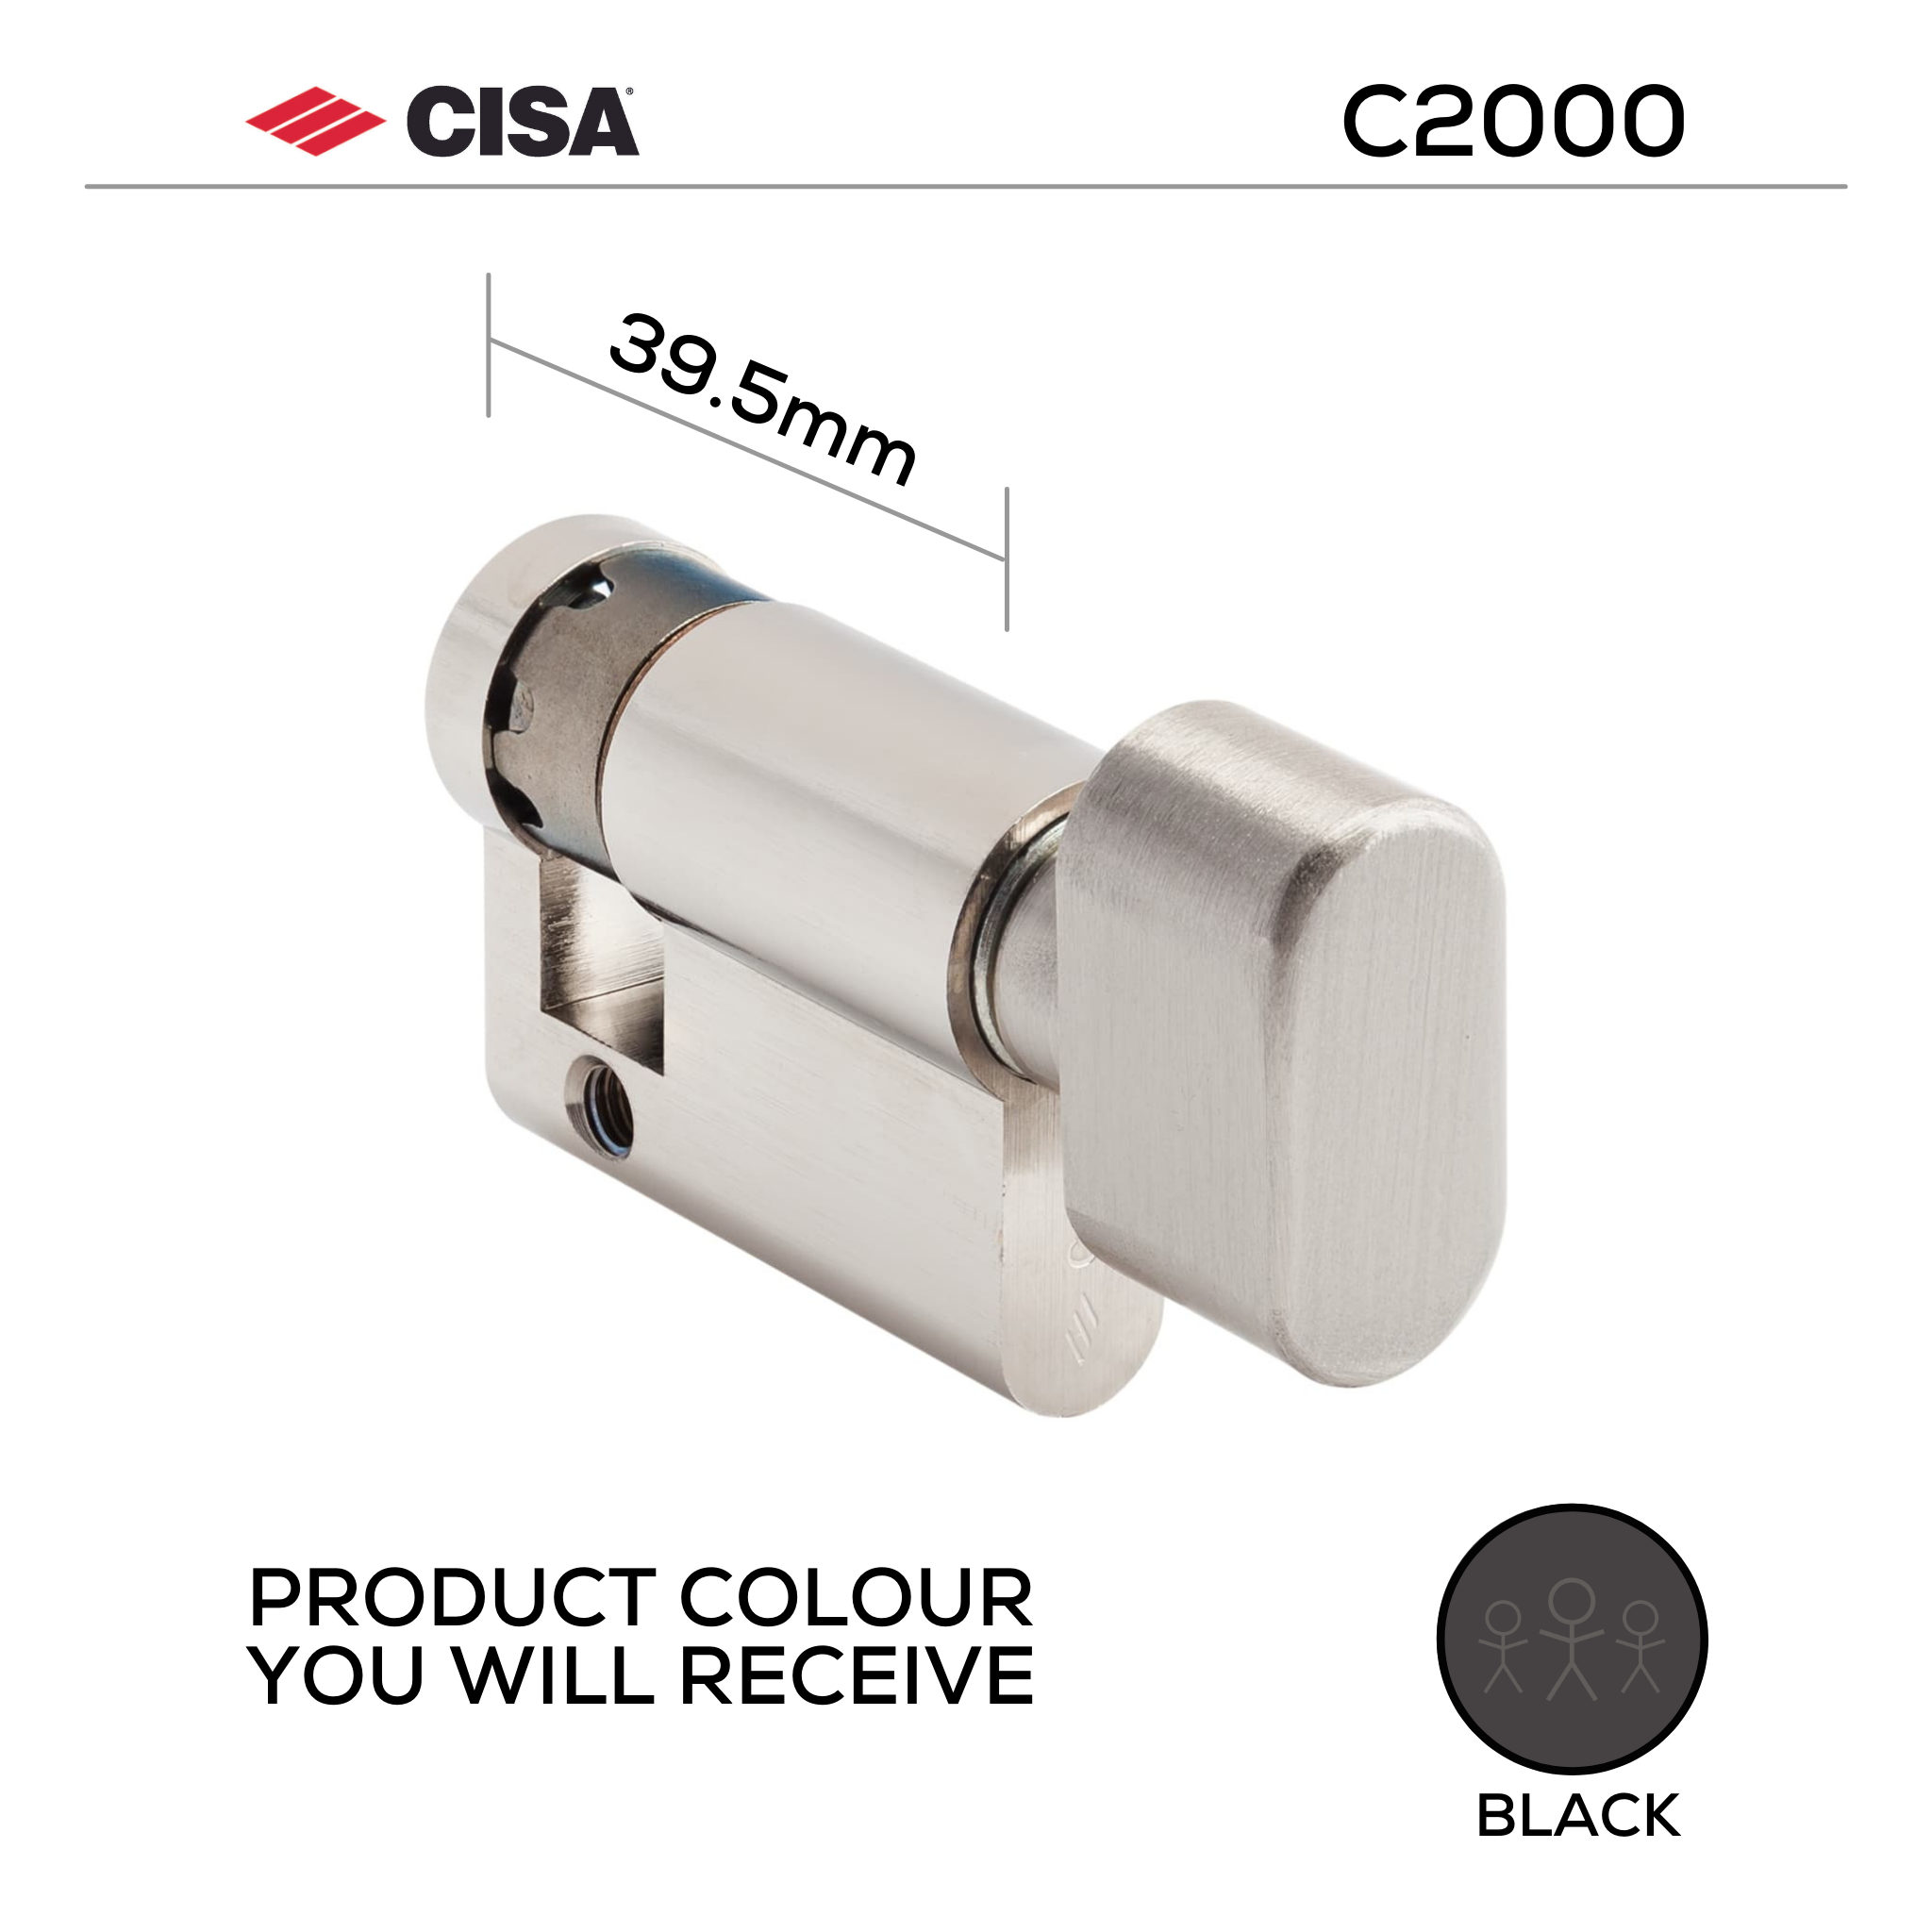 08559-04-00-BLK-KD, 39,5mm - 29.5/10, Half (Single Cylinder), C2000, Thumbturn, Keyed to Differ (Standard), Black, CISA